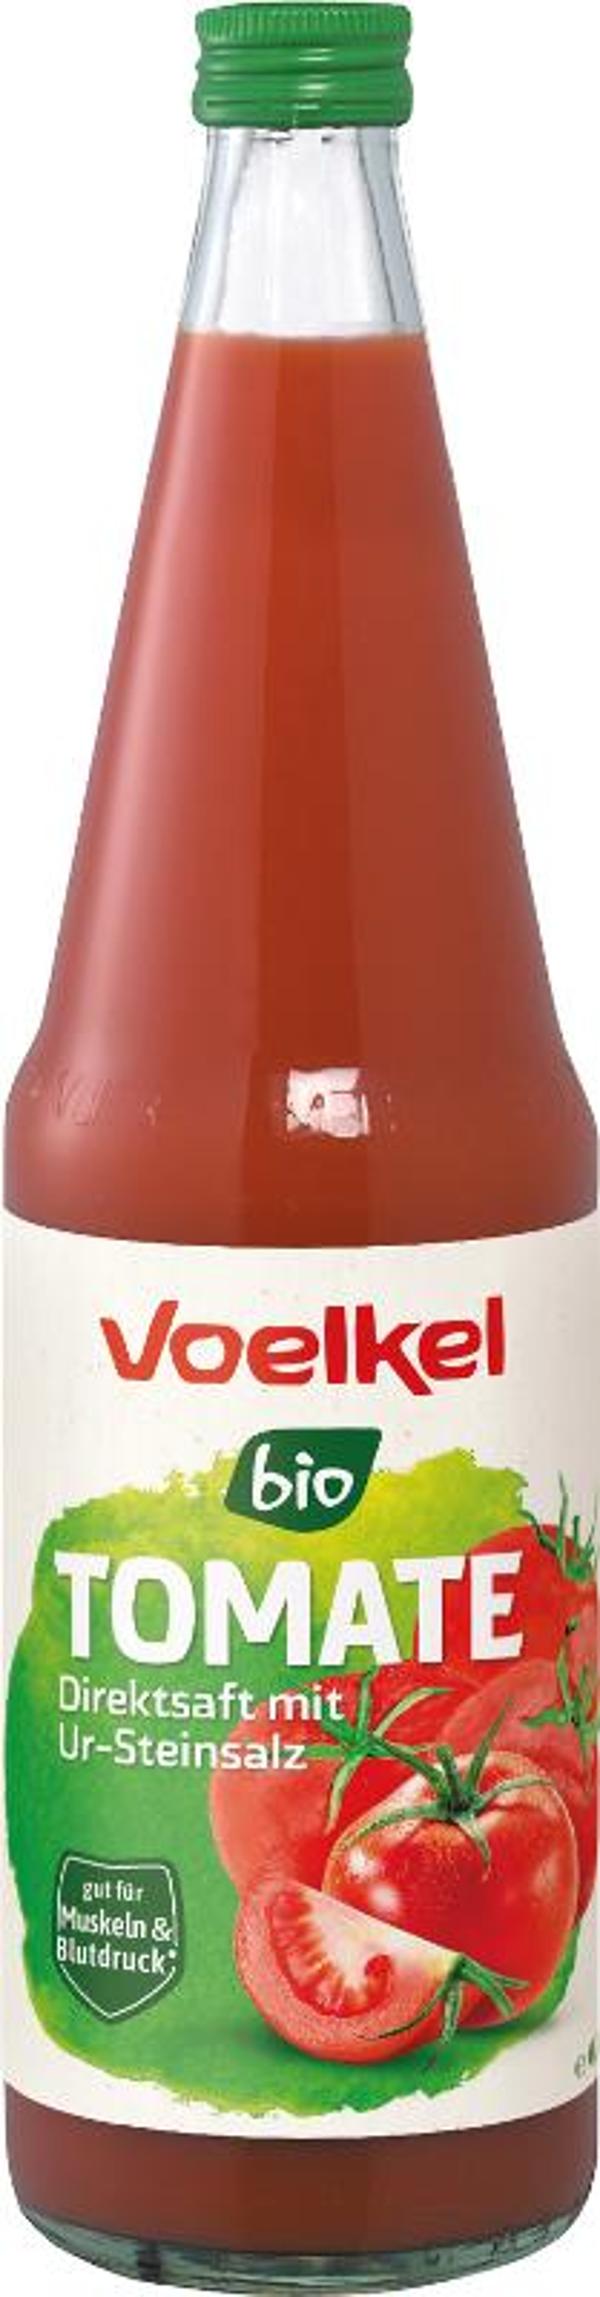 Produktfoto zu Tomatensaft KISTE (6x0,7l)